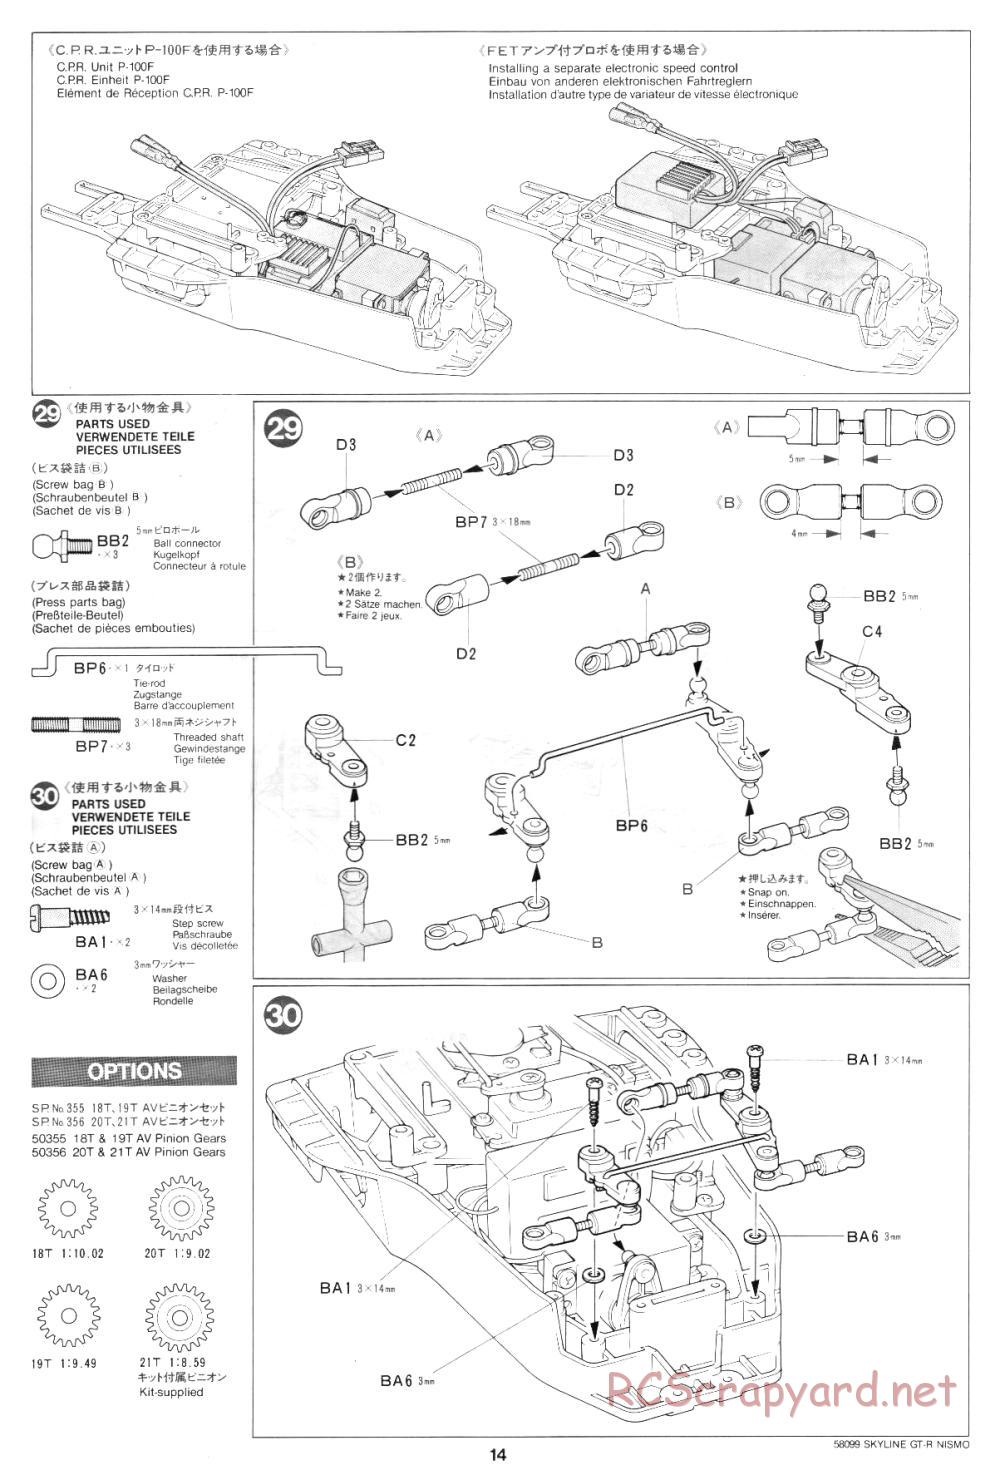 Tamiya - Nissan Skyline GT-R Nismo - 58099 - Manual - Page 14